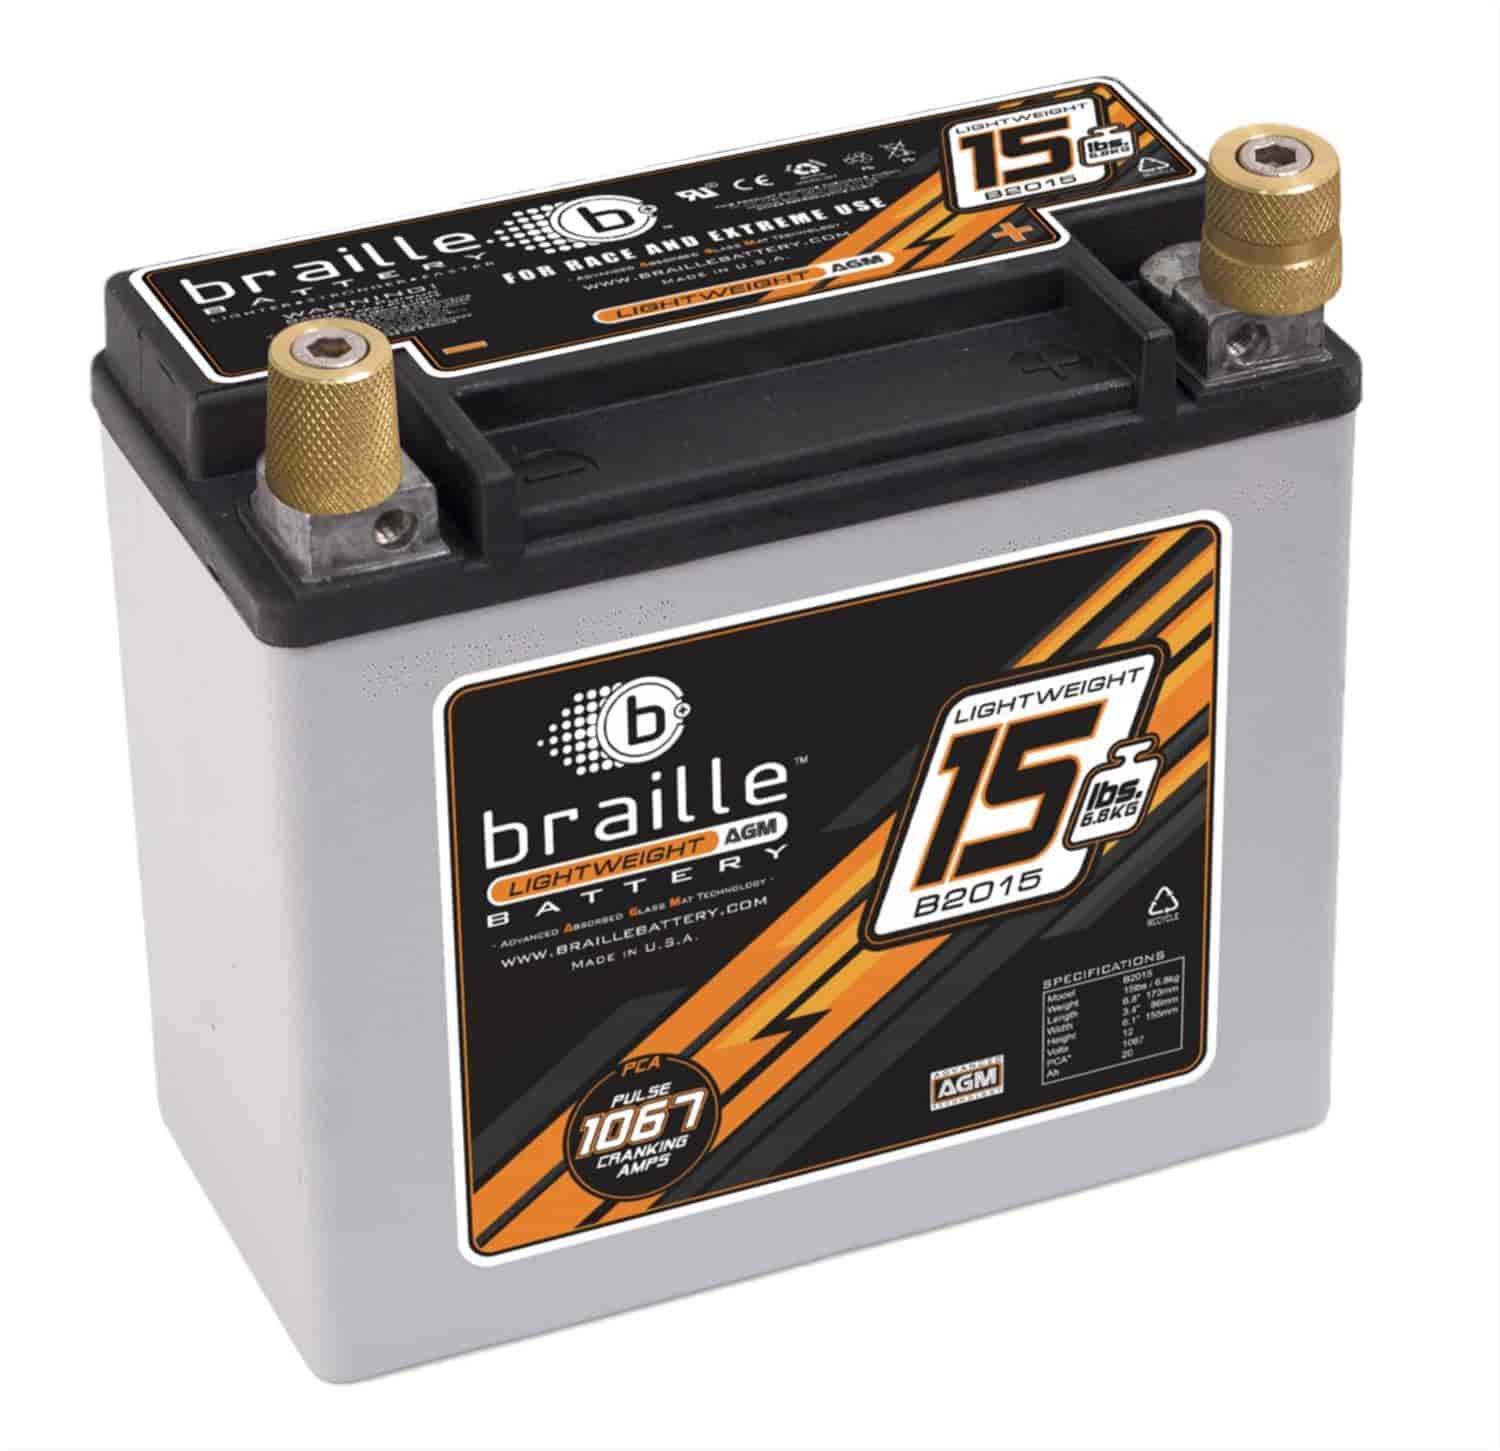 Advanced AGM Lightweight Racing Battery 15 lbs